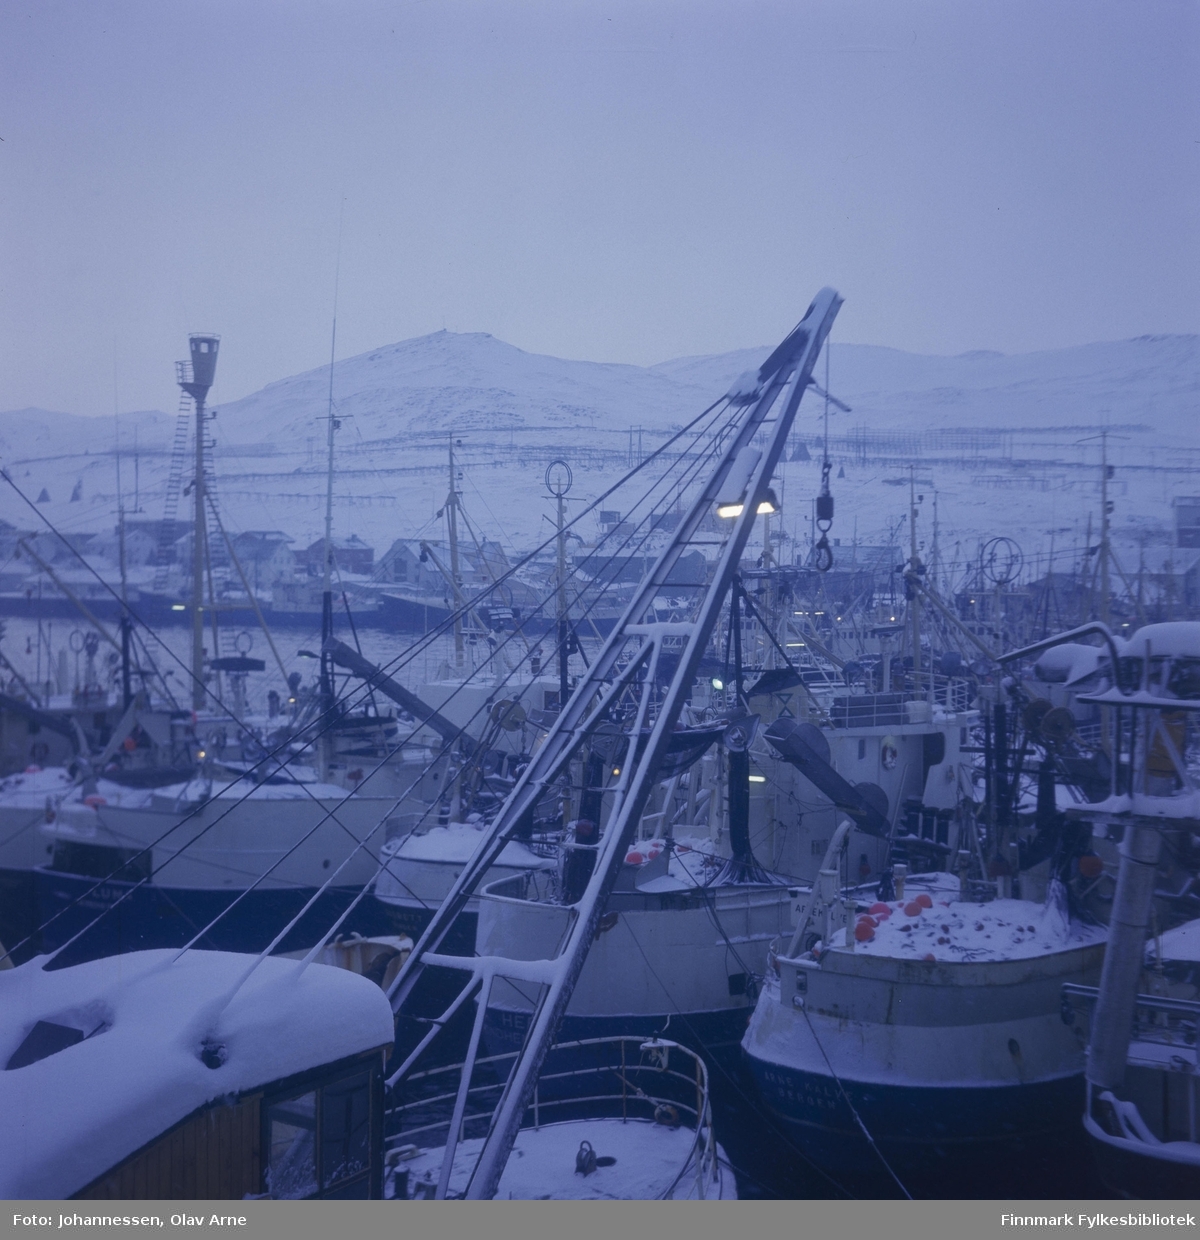 Foto av skip i Båtsfjord havn

Loddesnurpere med Melkarn i bakgrunnen

Man kan også se en hvalbåt med tønne i masta (til venstre)

Foto trolig tatt på 1960/70-tallet